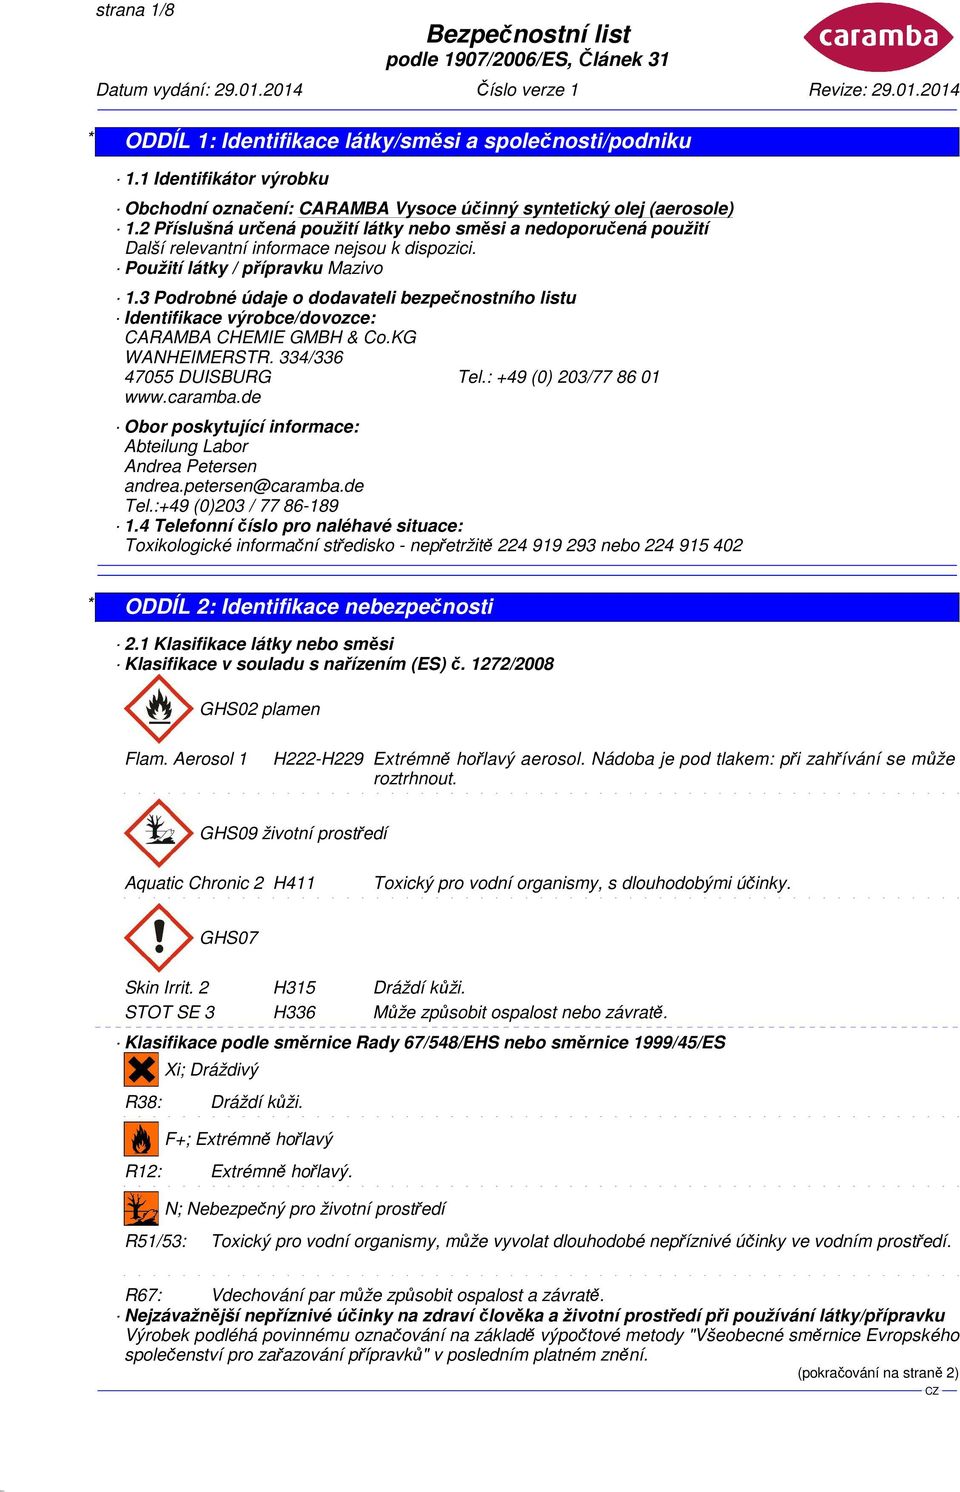 3 Podrobné údaje o dodavateli bezpečnostního listu Identifikace výrobce/dovozce: CARAMBA CHEMIE GMBH & Co.KG WANHEIMERSTR. 334/336 47055 DUISBURG Tel.: +49 (0) 203/77 86 01 www.caramba.